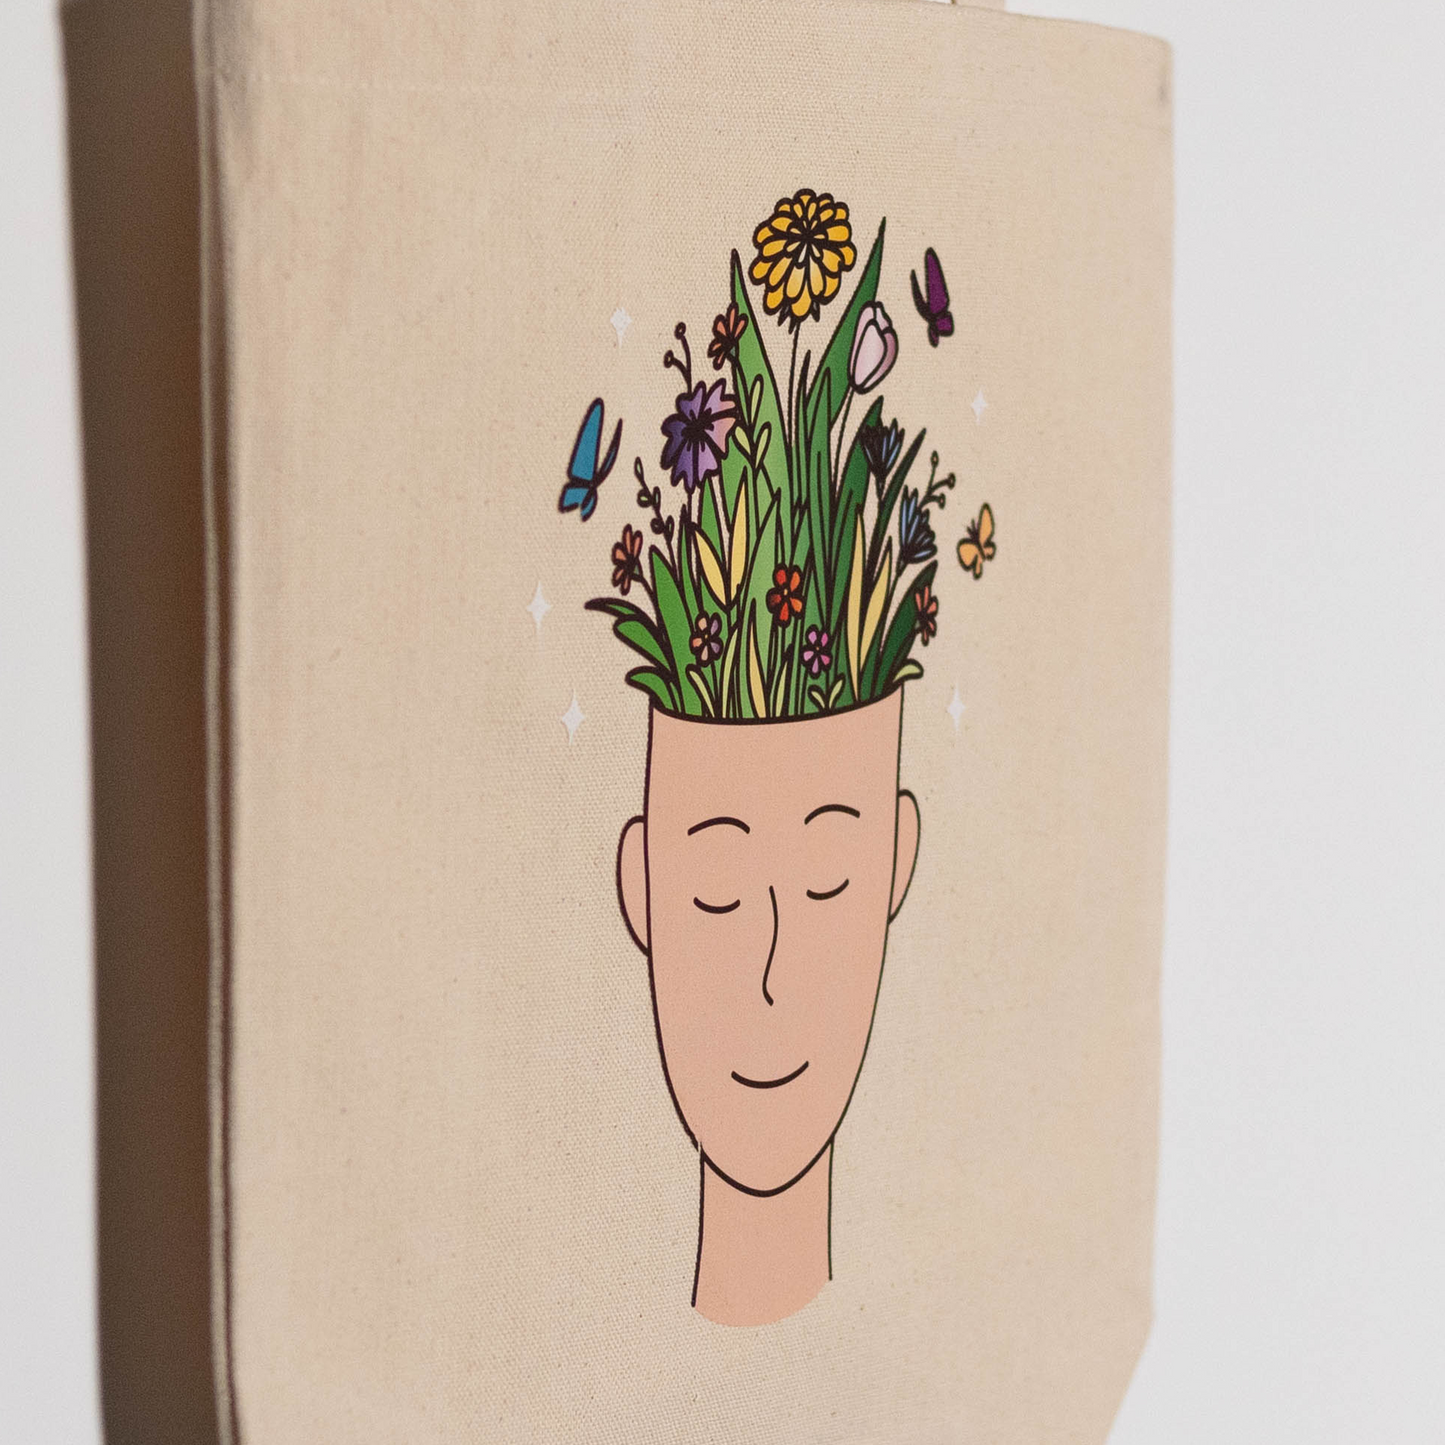 Plant Head Canvas Tote Bag